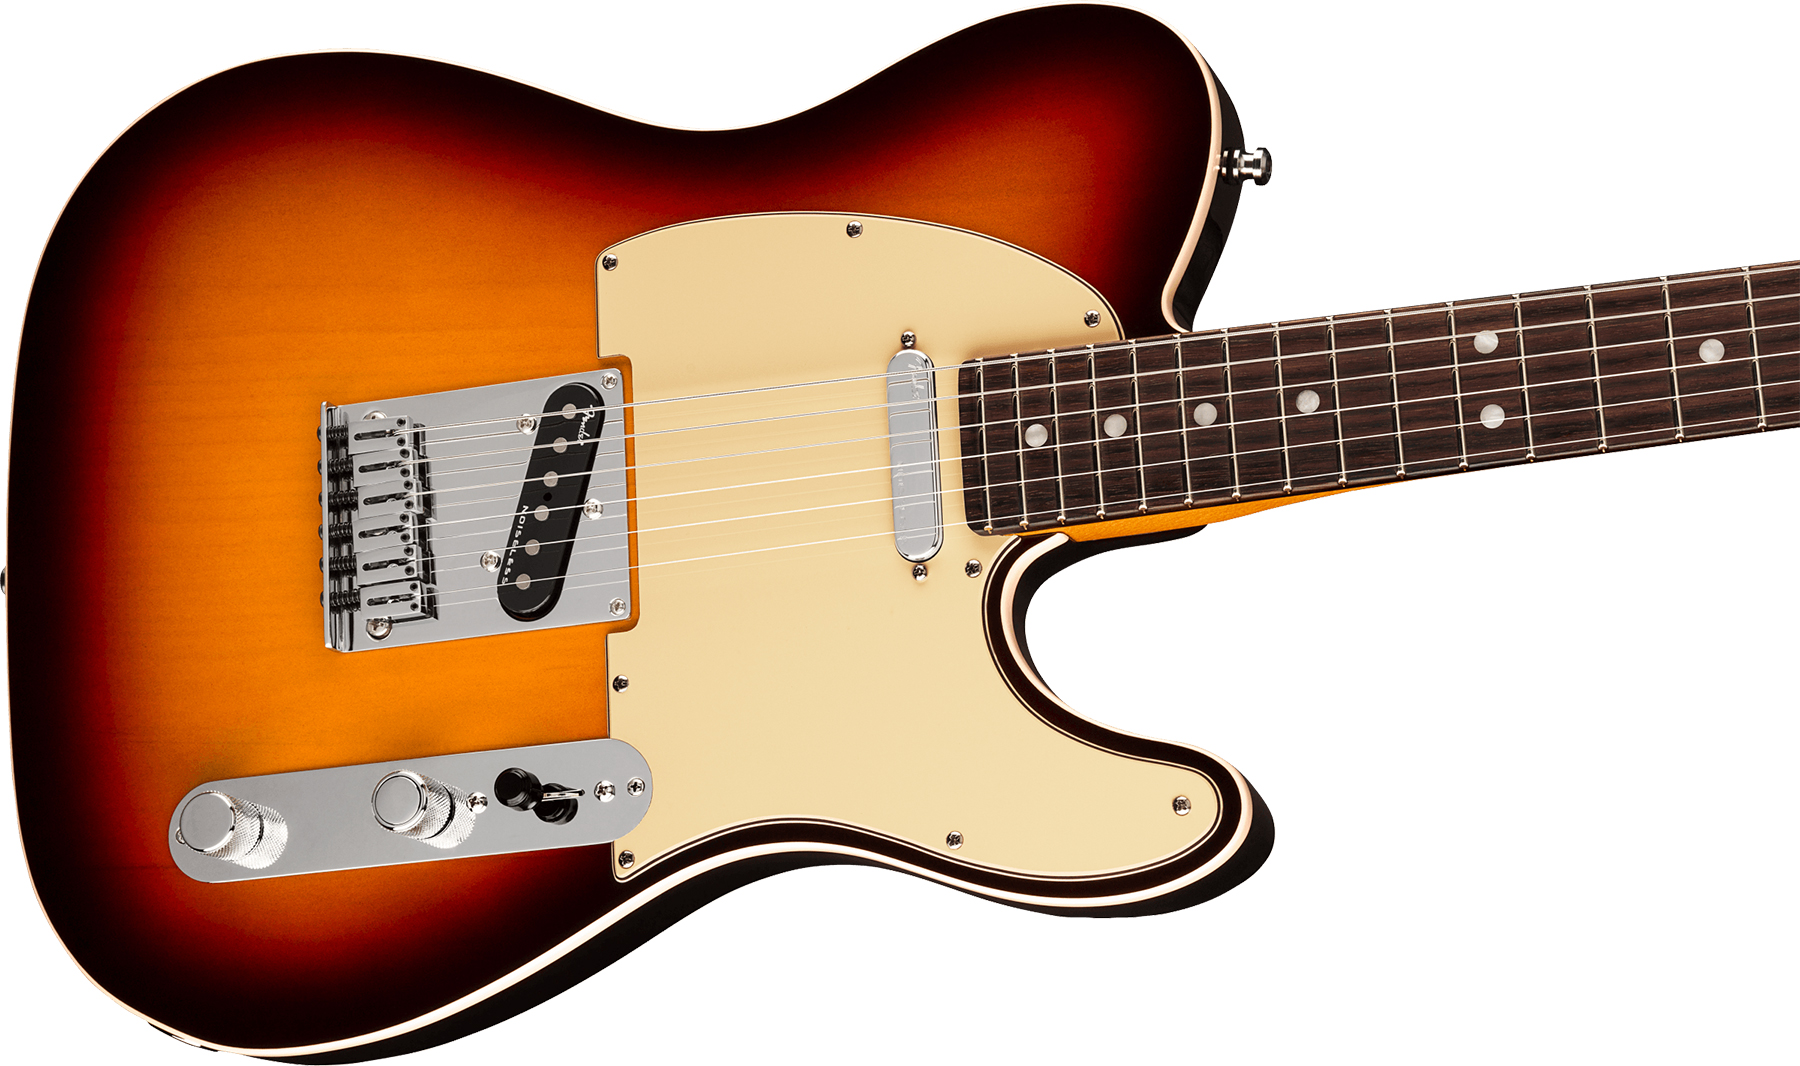 Fender Tele American Ultra 2019 Usa Rw - Ultraburst - Guitarra eléctrica con forma de tel - Variation 2